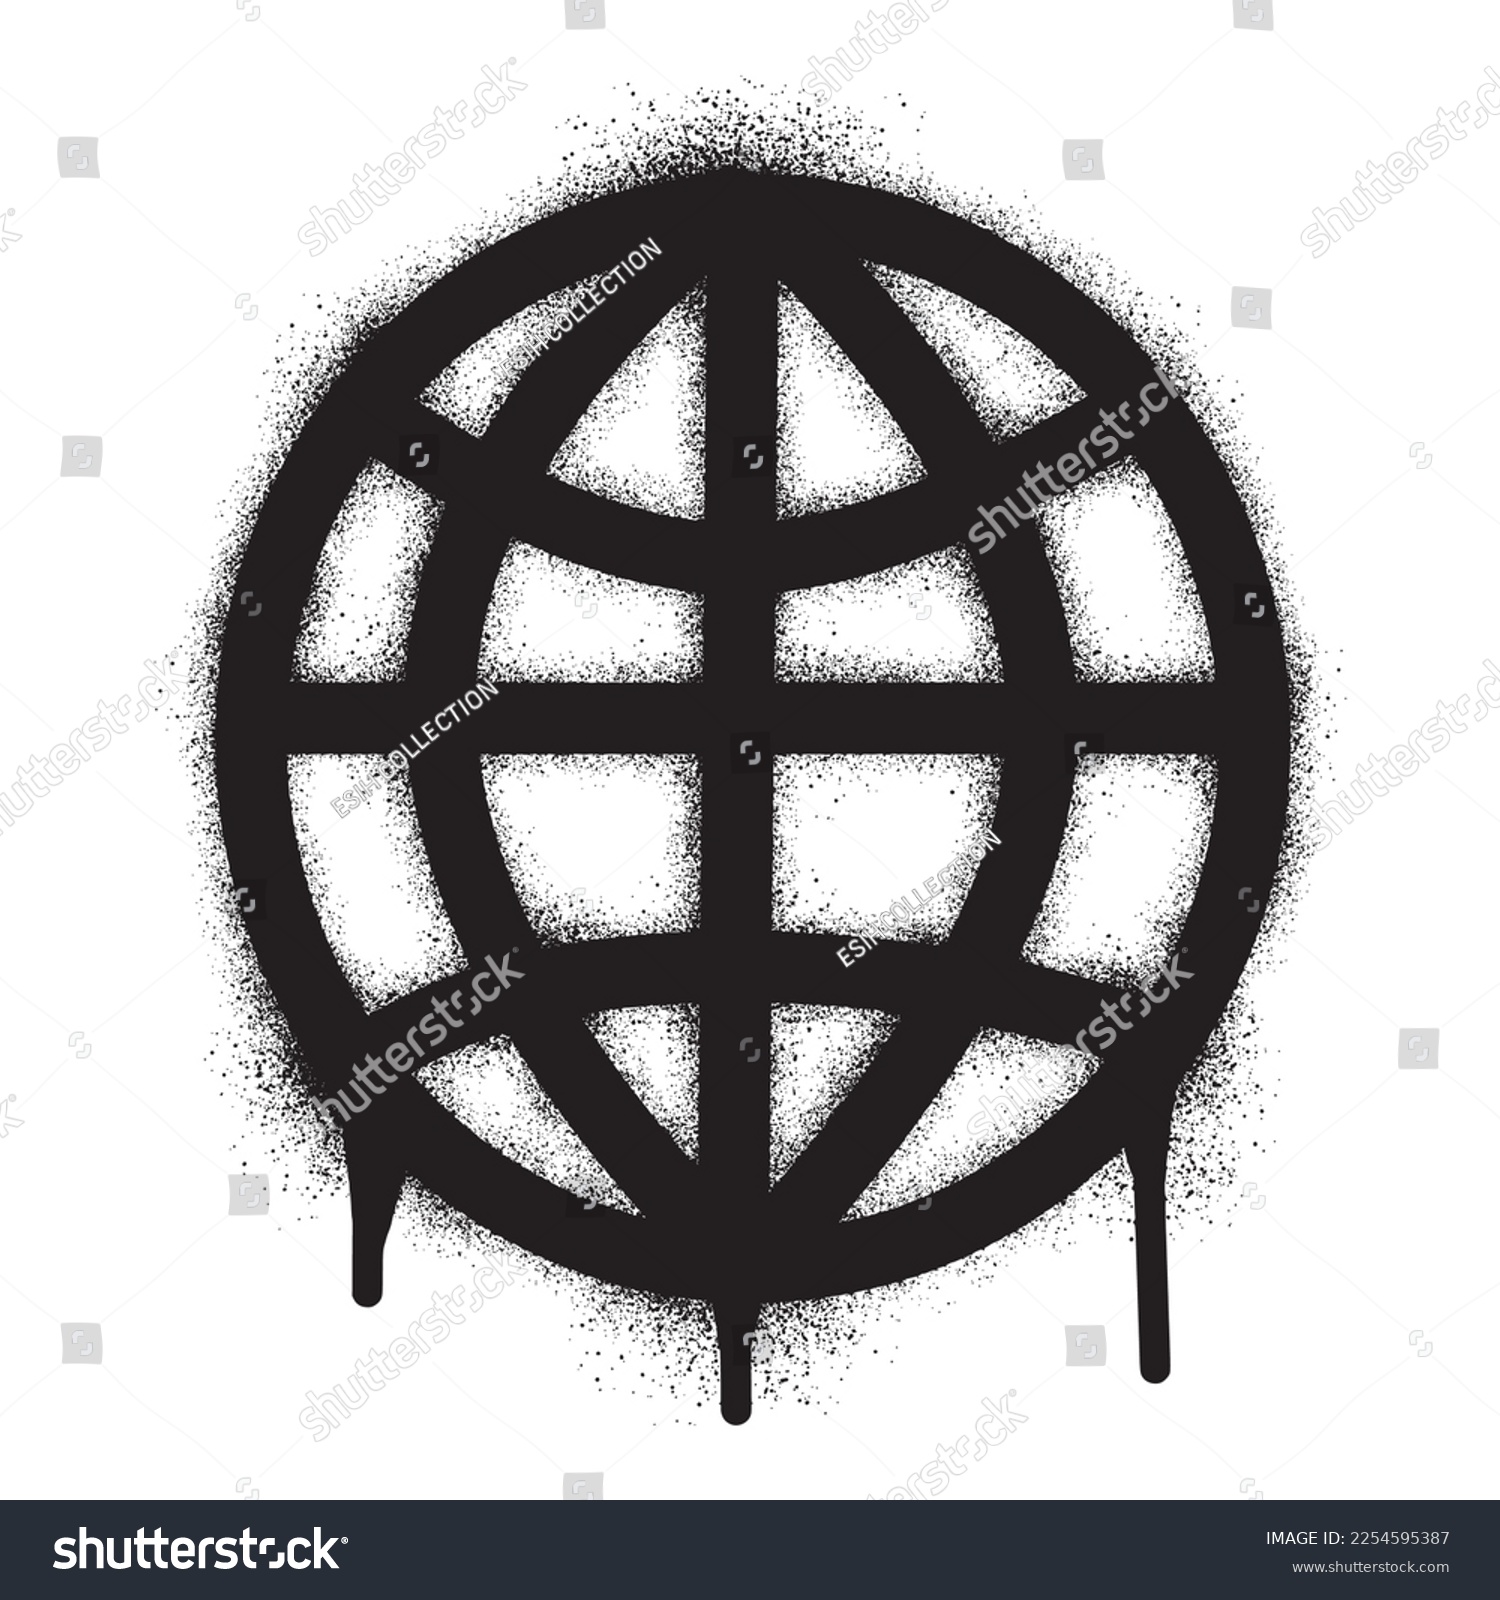 SVG of Globe icon graffiti with black spray paint svg